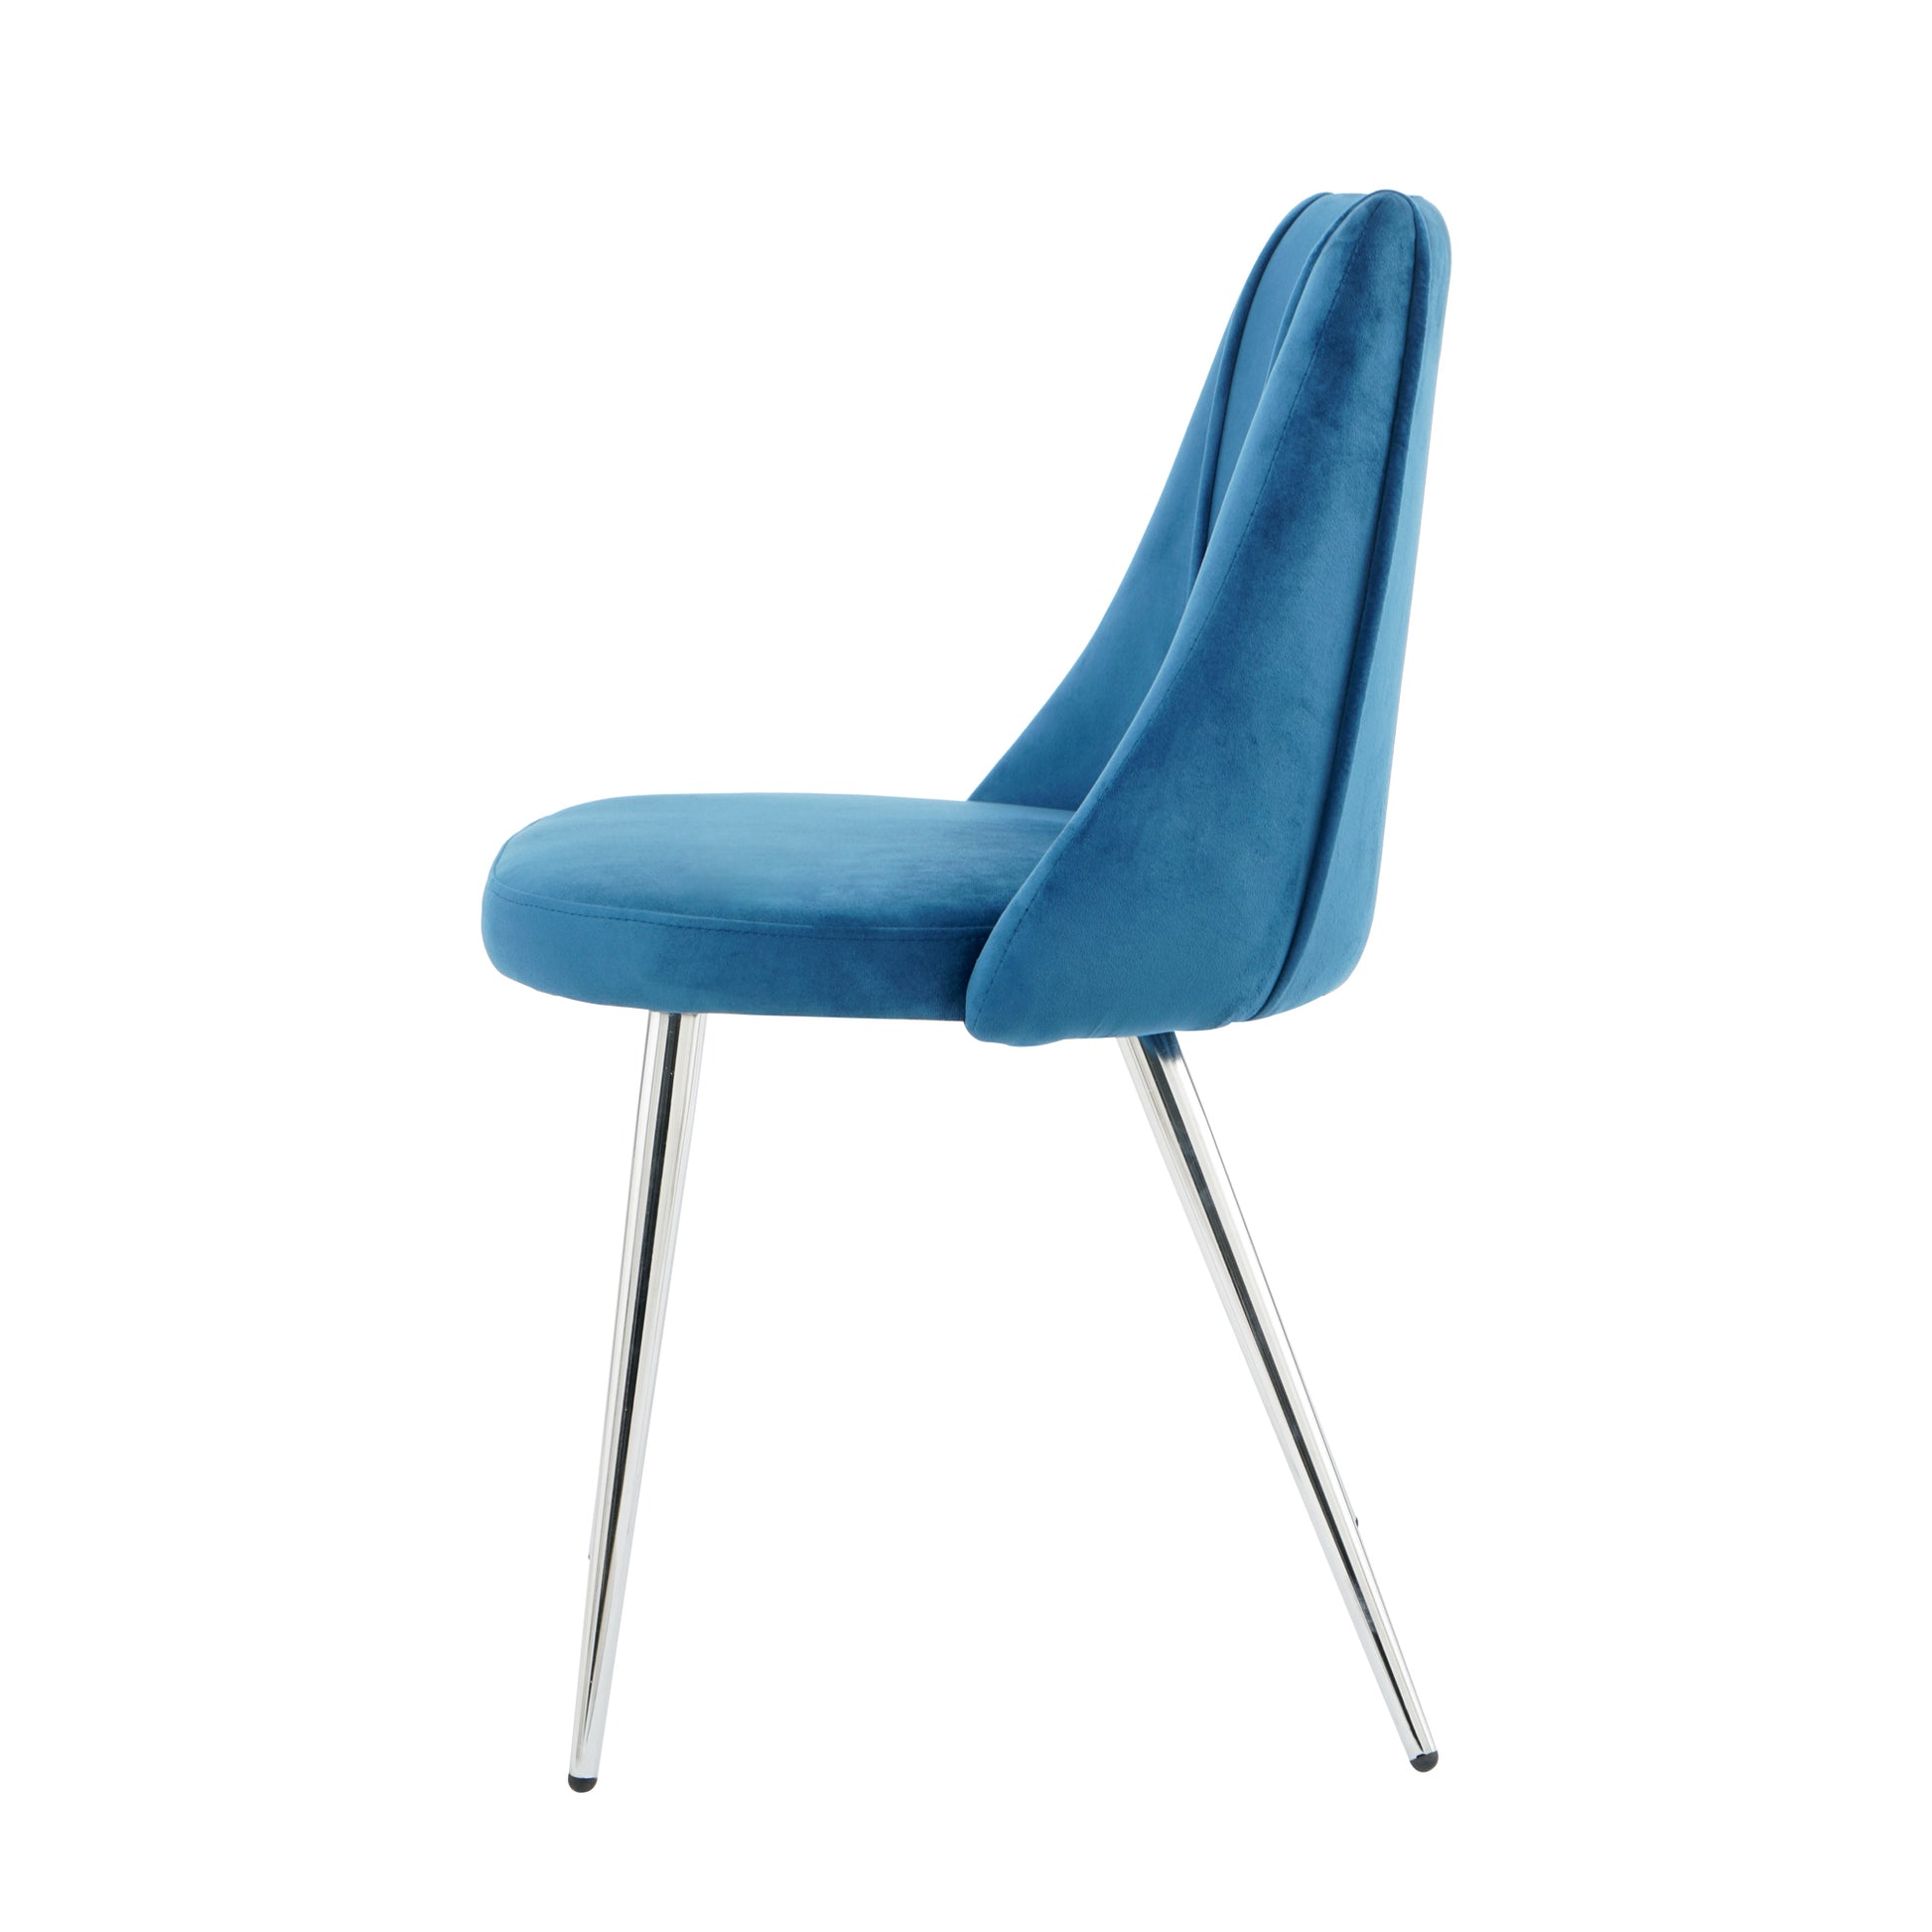 Modern simple velvet blue dining chair home bedroom stool back dressing chair student desk chair chrome metal legs(set of 4) - Enova Luxe Home Store